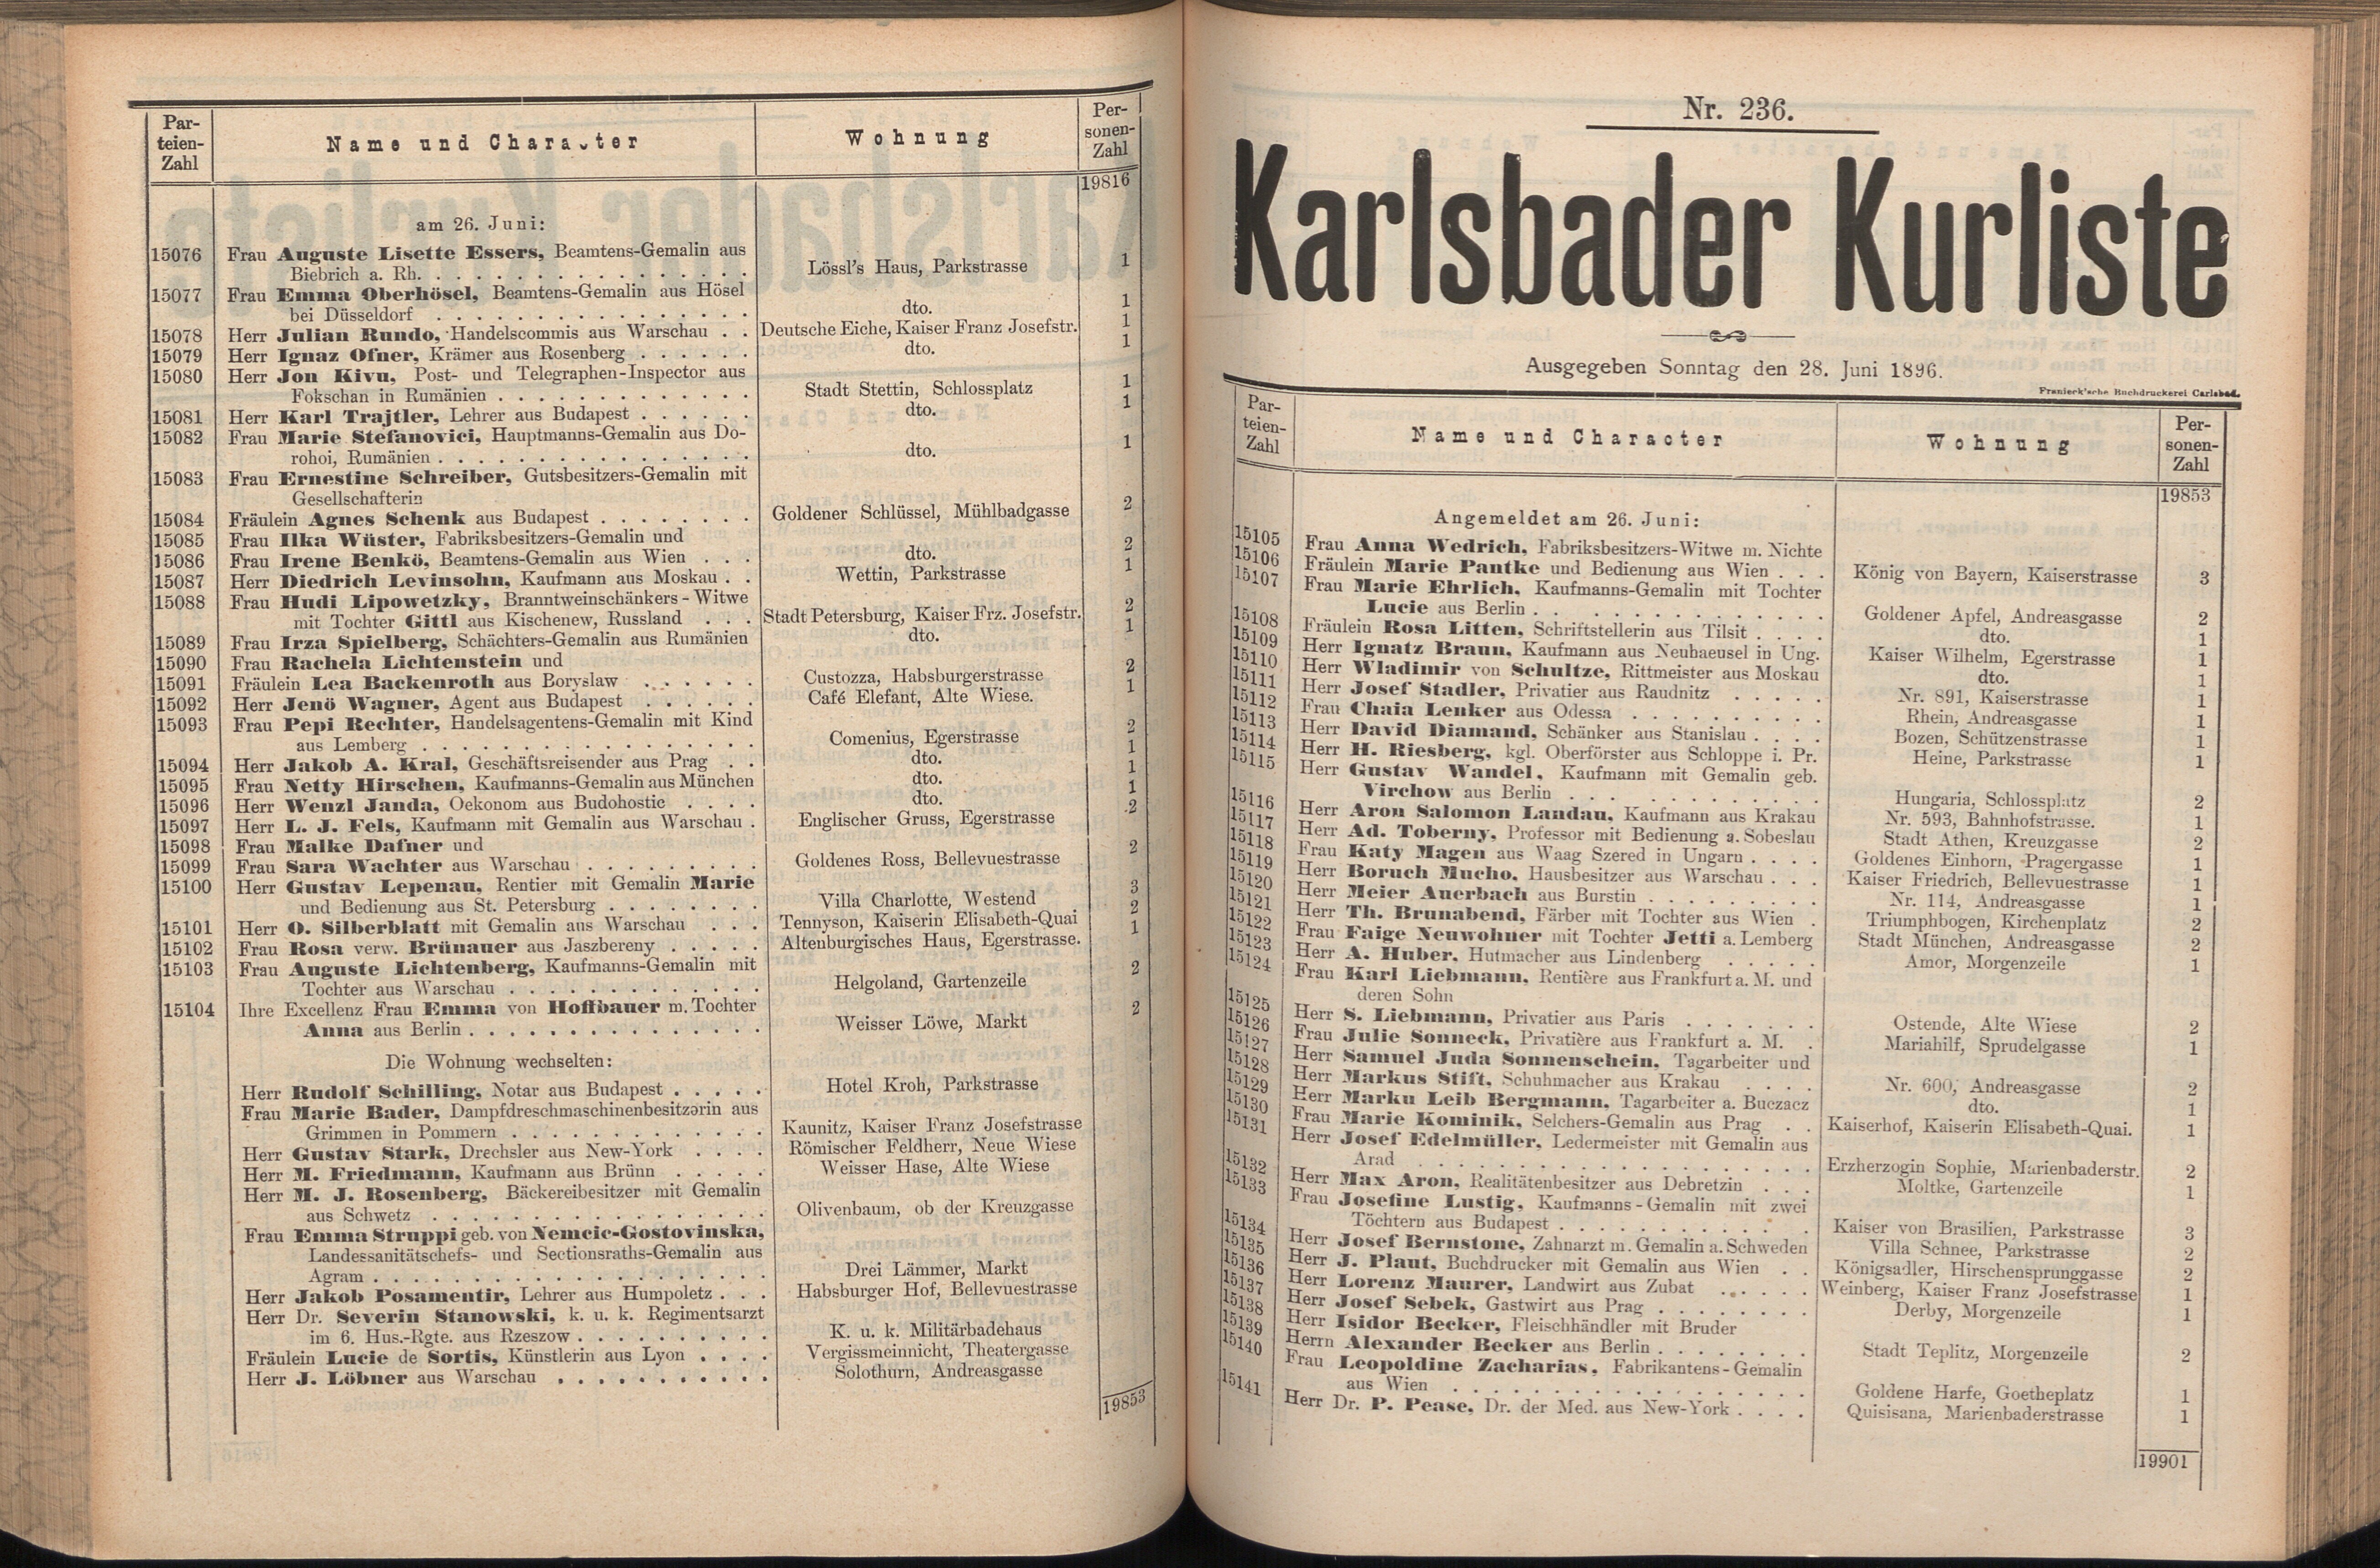 309. soap-kv_knihovna_karlsbader-kurliste-1896_3100